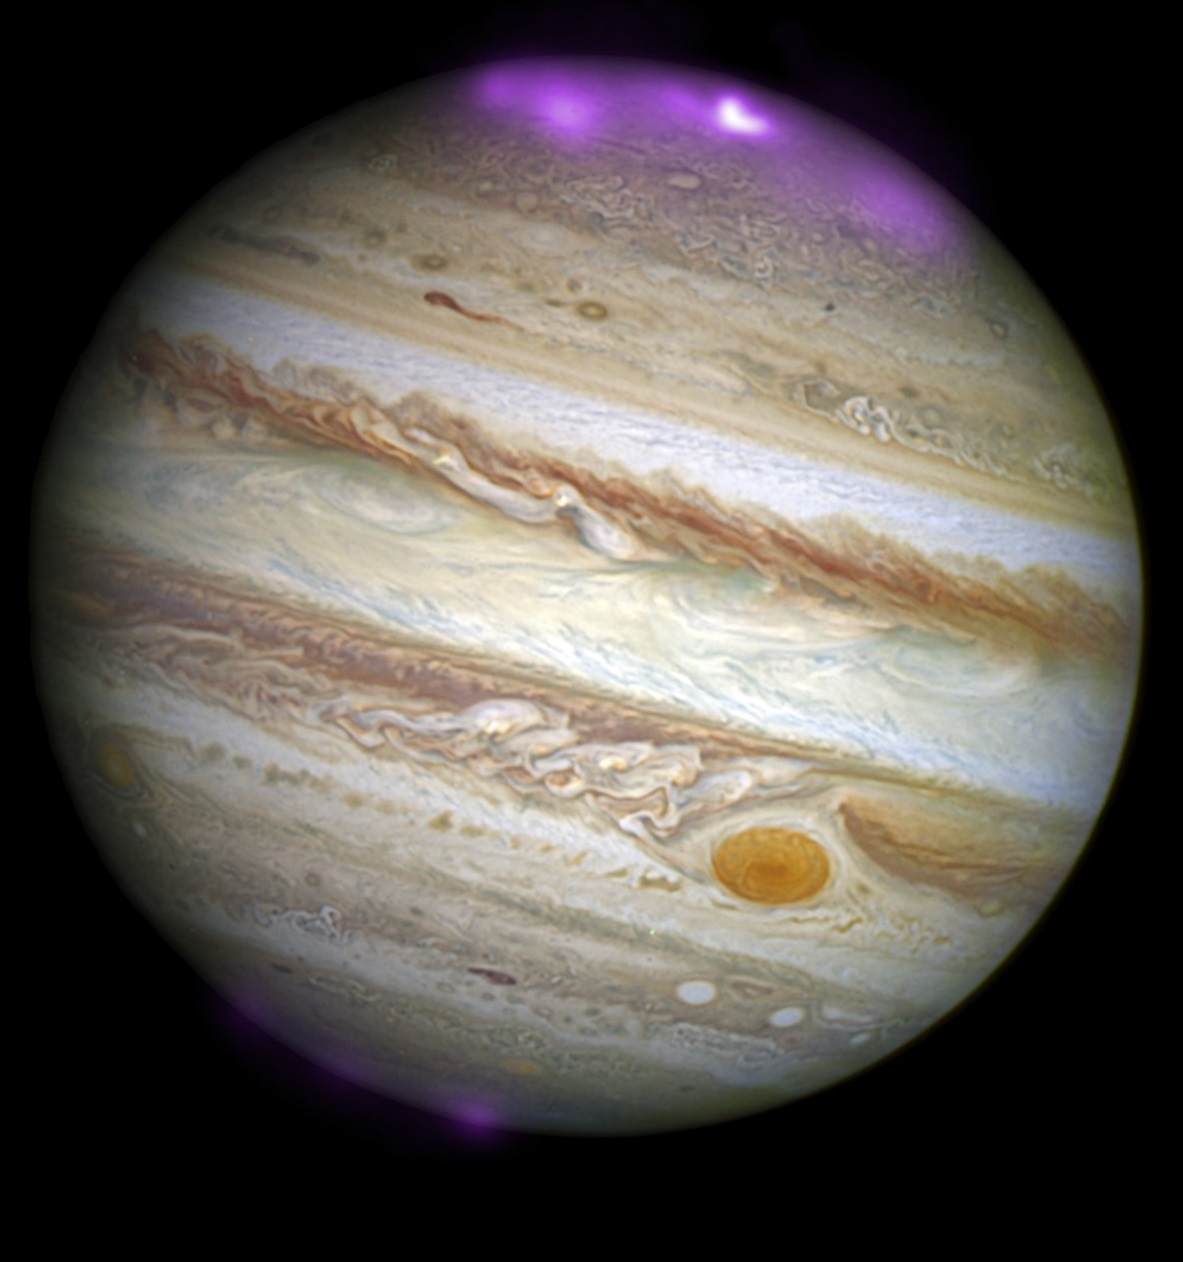 ‘Cold’ Great Spot discovered on Jupiter